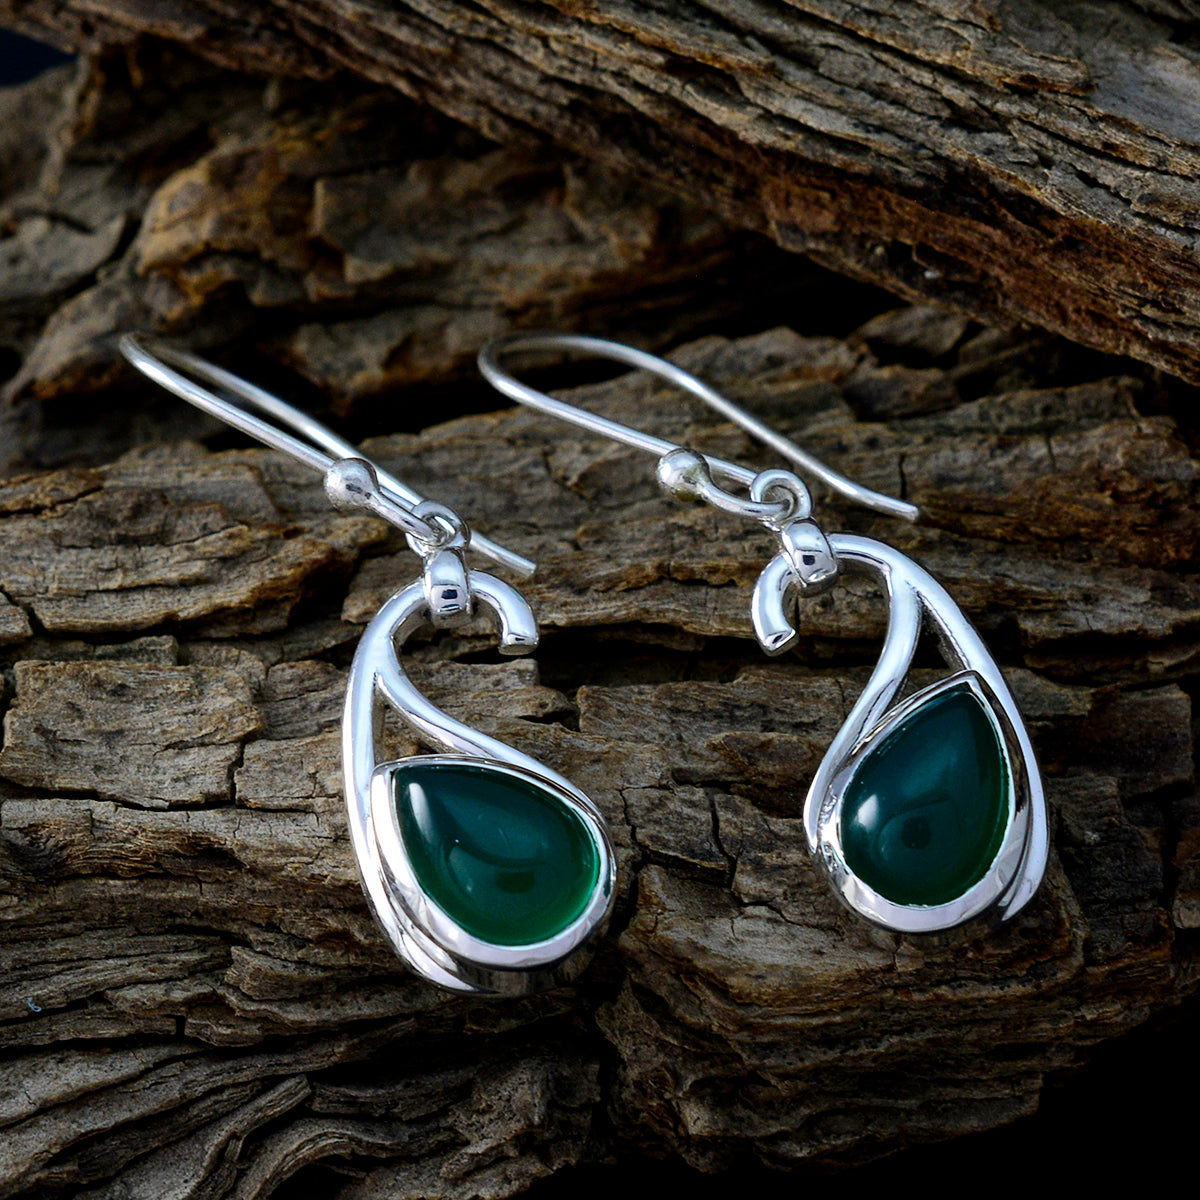 Riyo Nice Gemstone Pear Cabochon Green Onyx Silver Earrings gift for friends